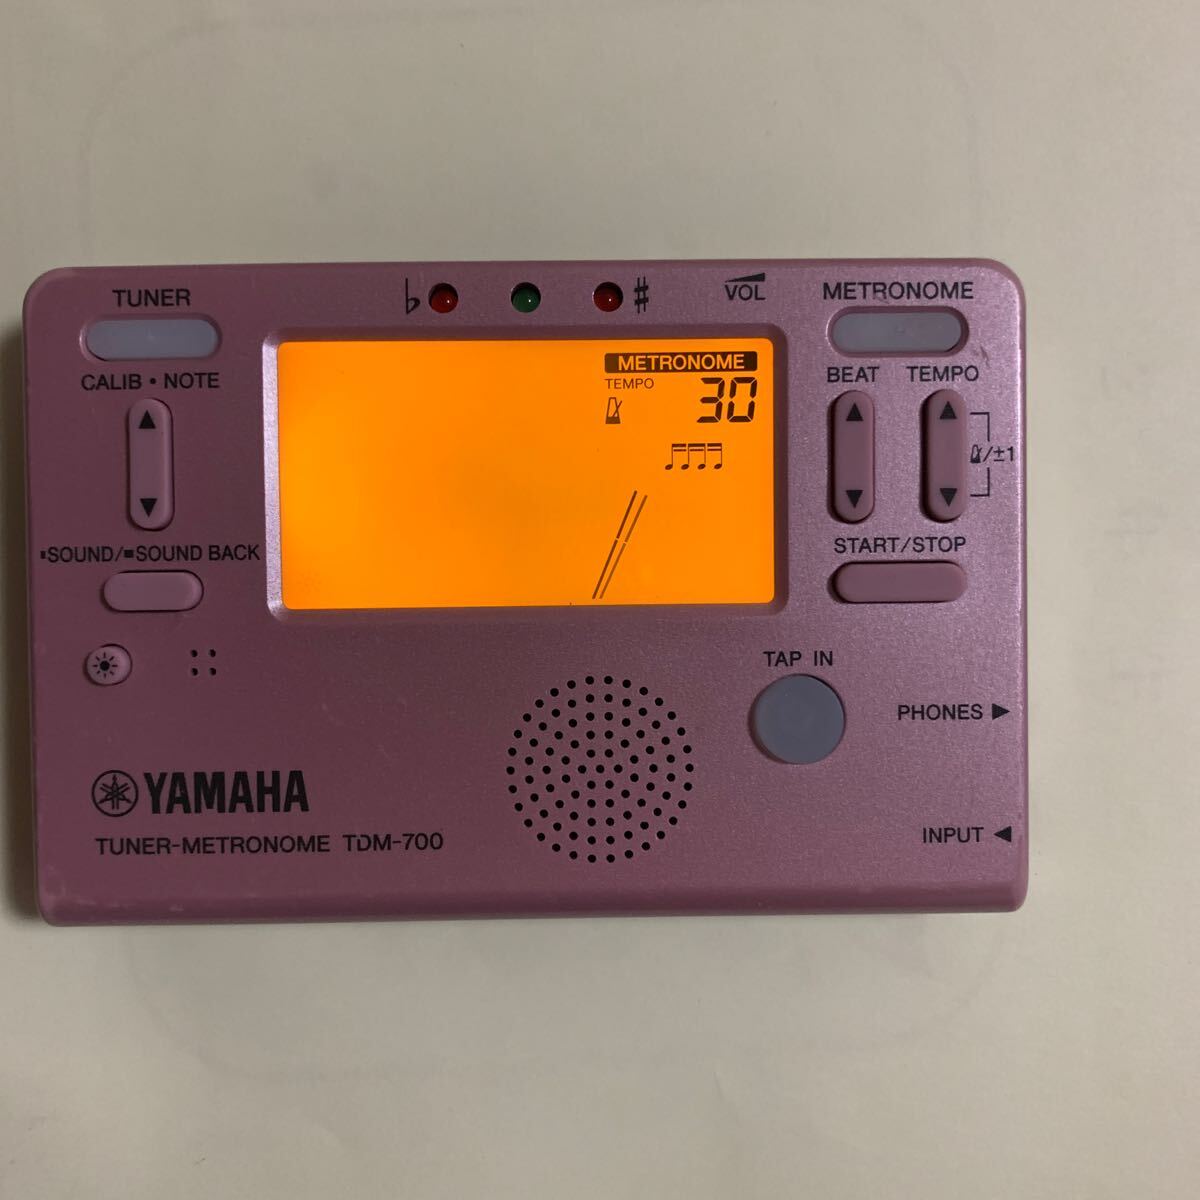  tuner metronome TDM-700 YAMAHA Yamaha secondhand goods electrification has confirmed 